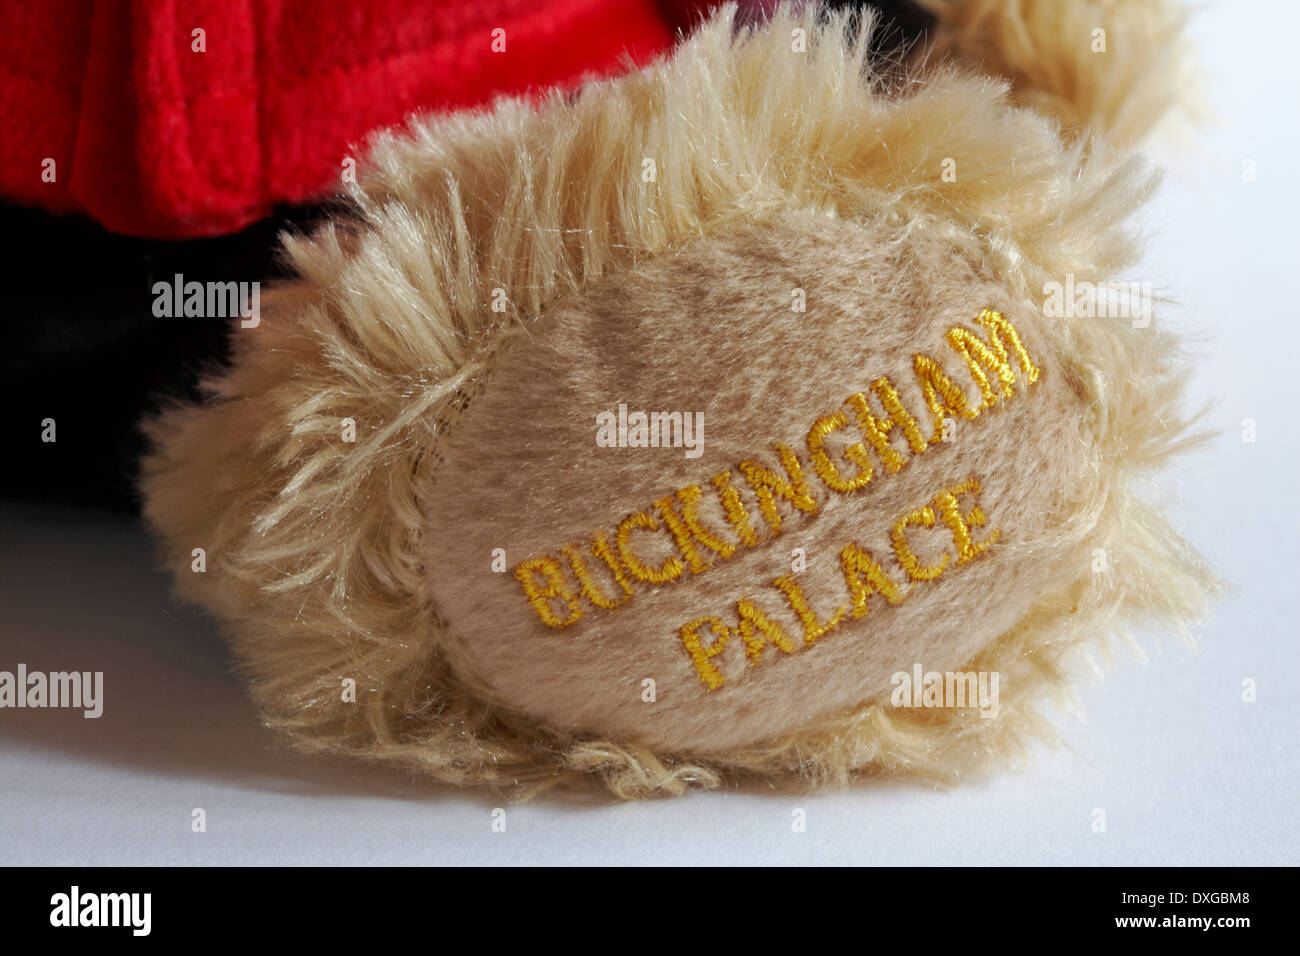 Buckingham Palace merchandise - stitching on paw of Buckingham Palace beefeater soldier guard Teddy bear Stock Photo